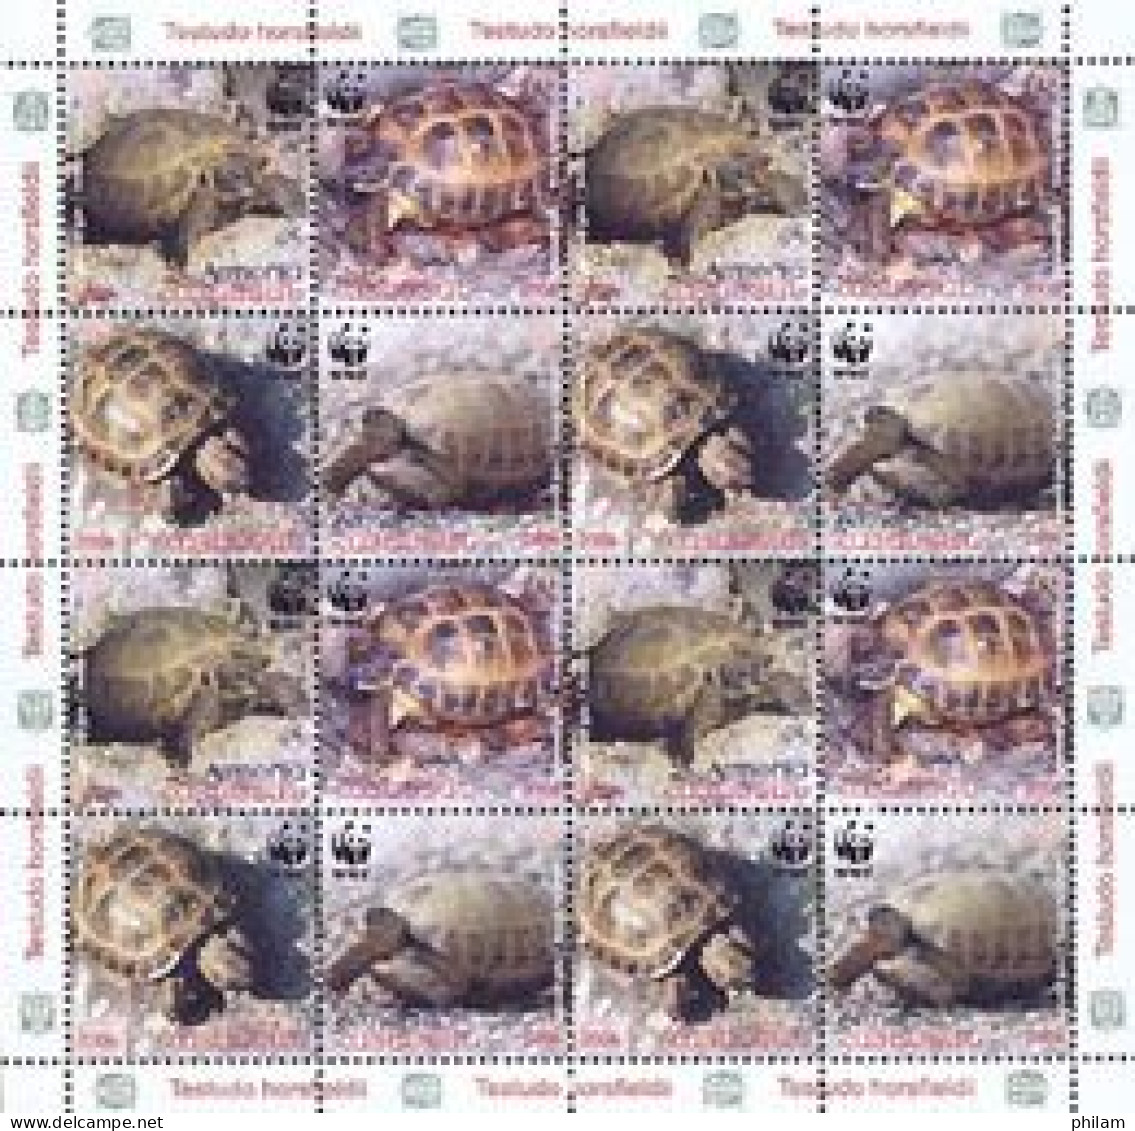 ARMENIE 2007 - Tortue Testudo Horsdieldi - Feuille De 4 Séries - Unused Stamps